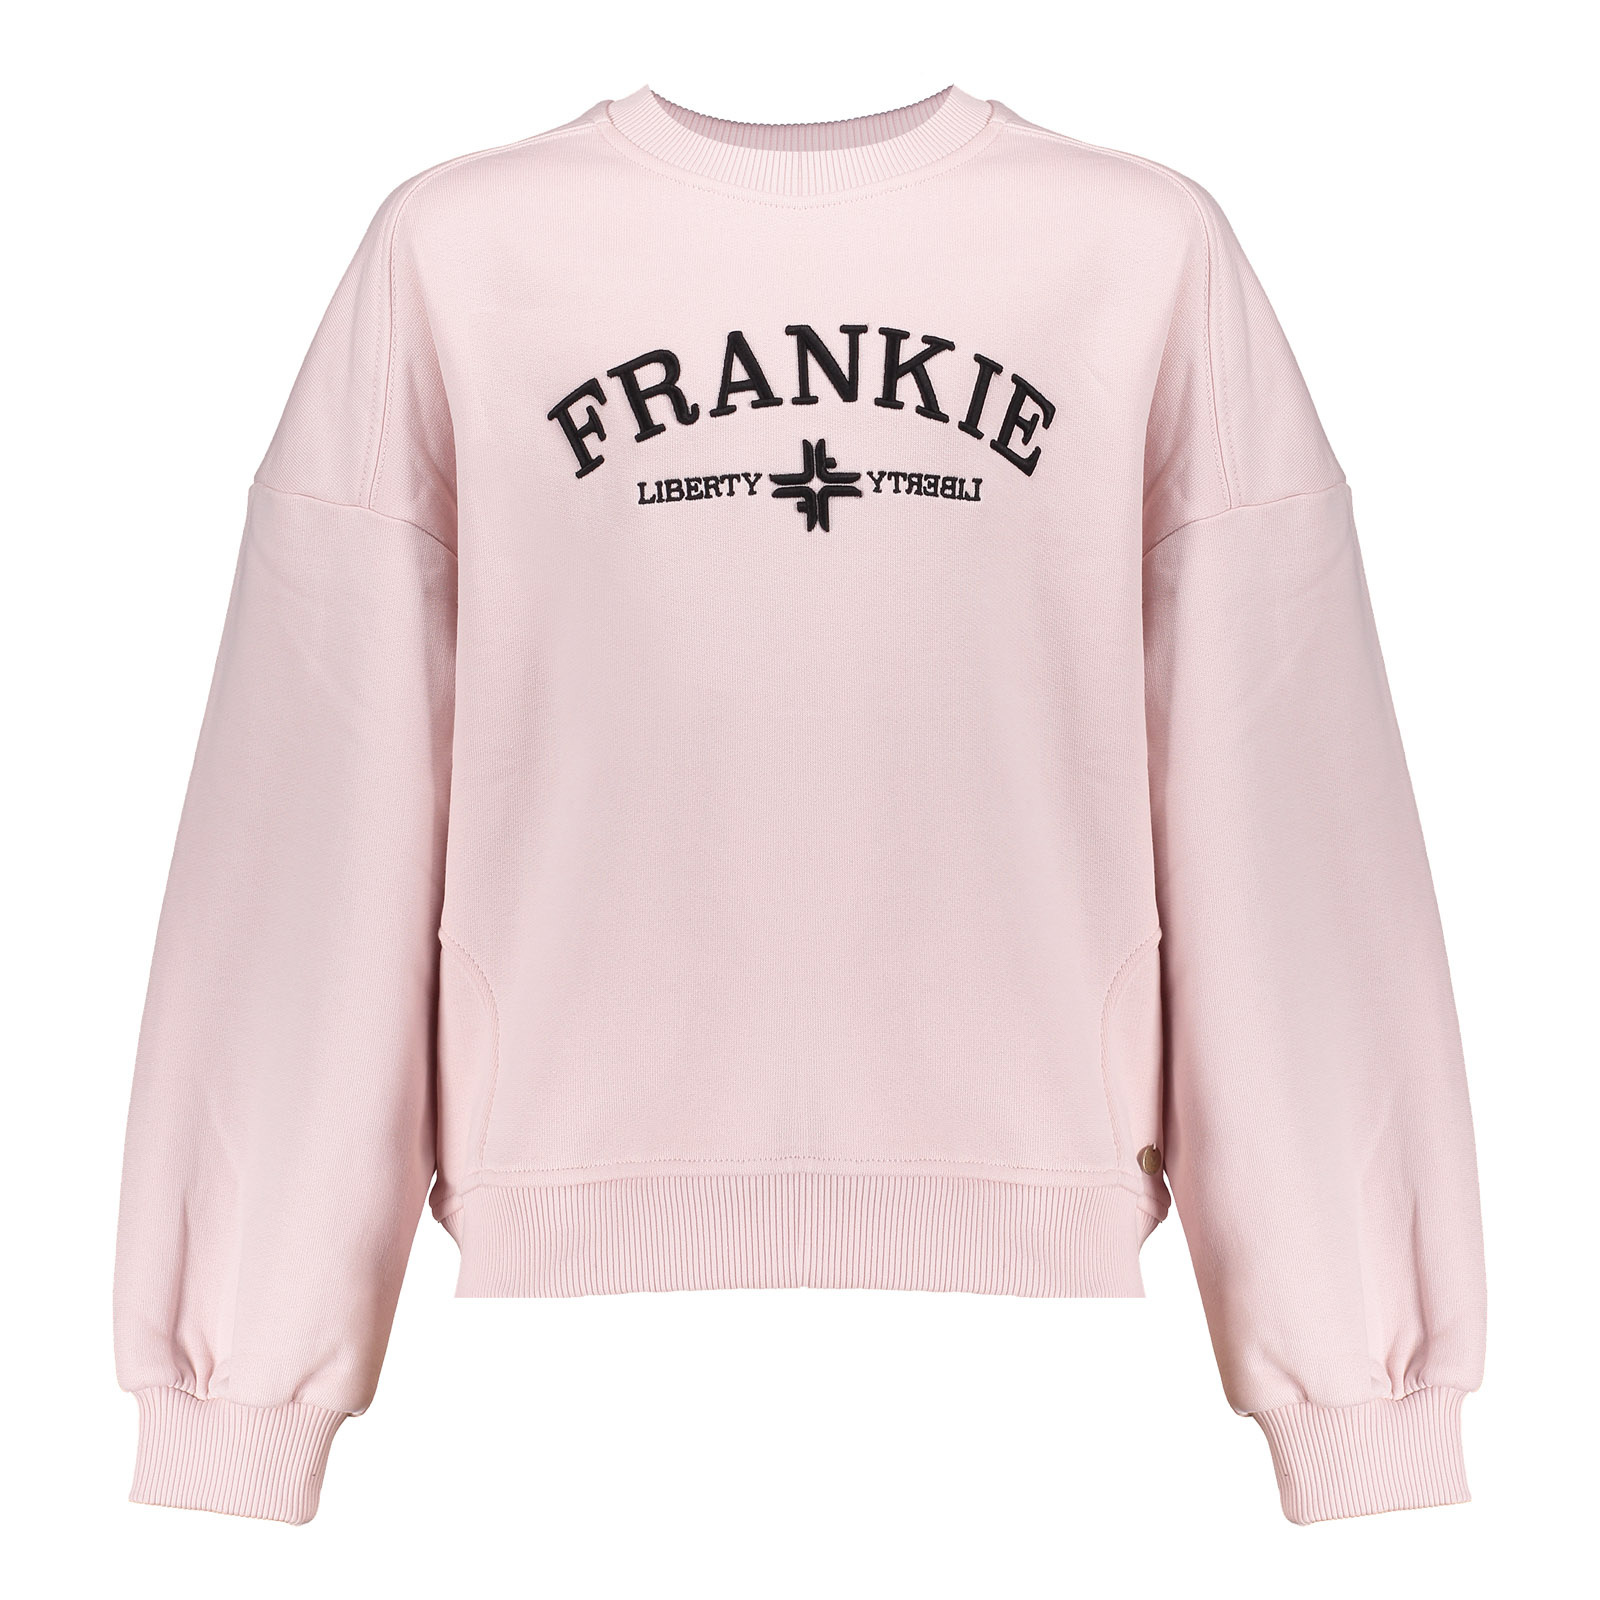 Frankie & Liberty Meisjes sweat shirt - Kymora - Doll